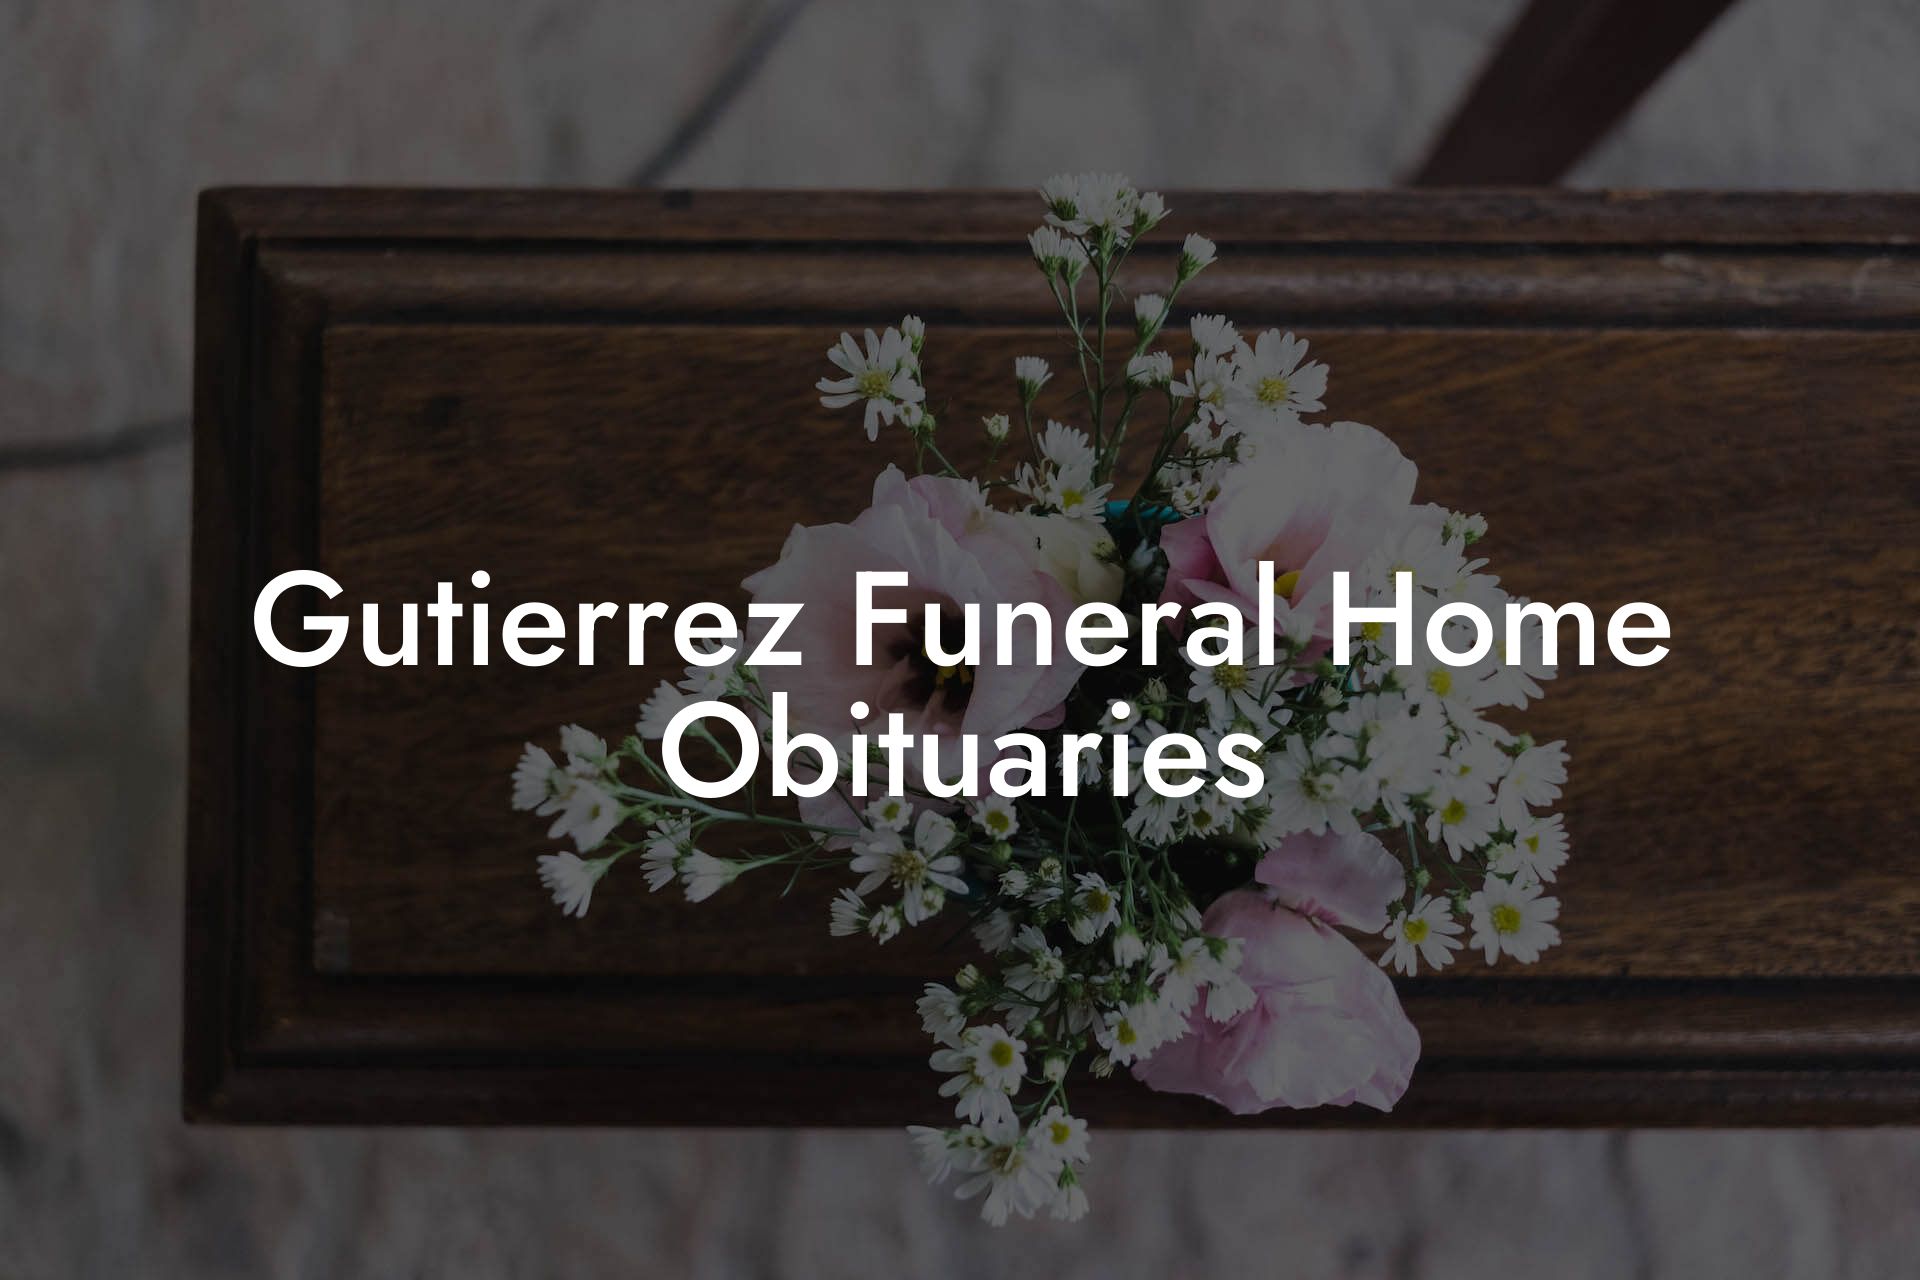 Gutierrez Funeral Home Obituaries